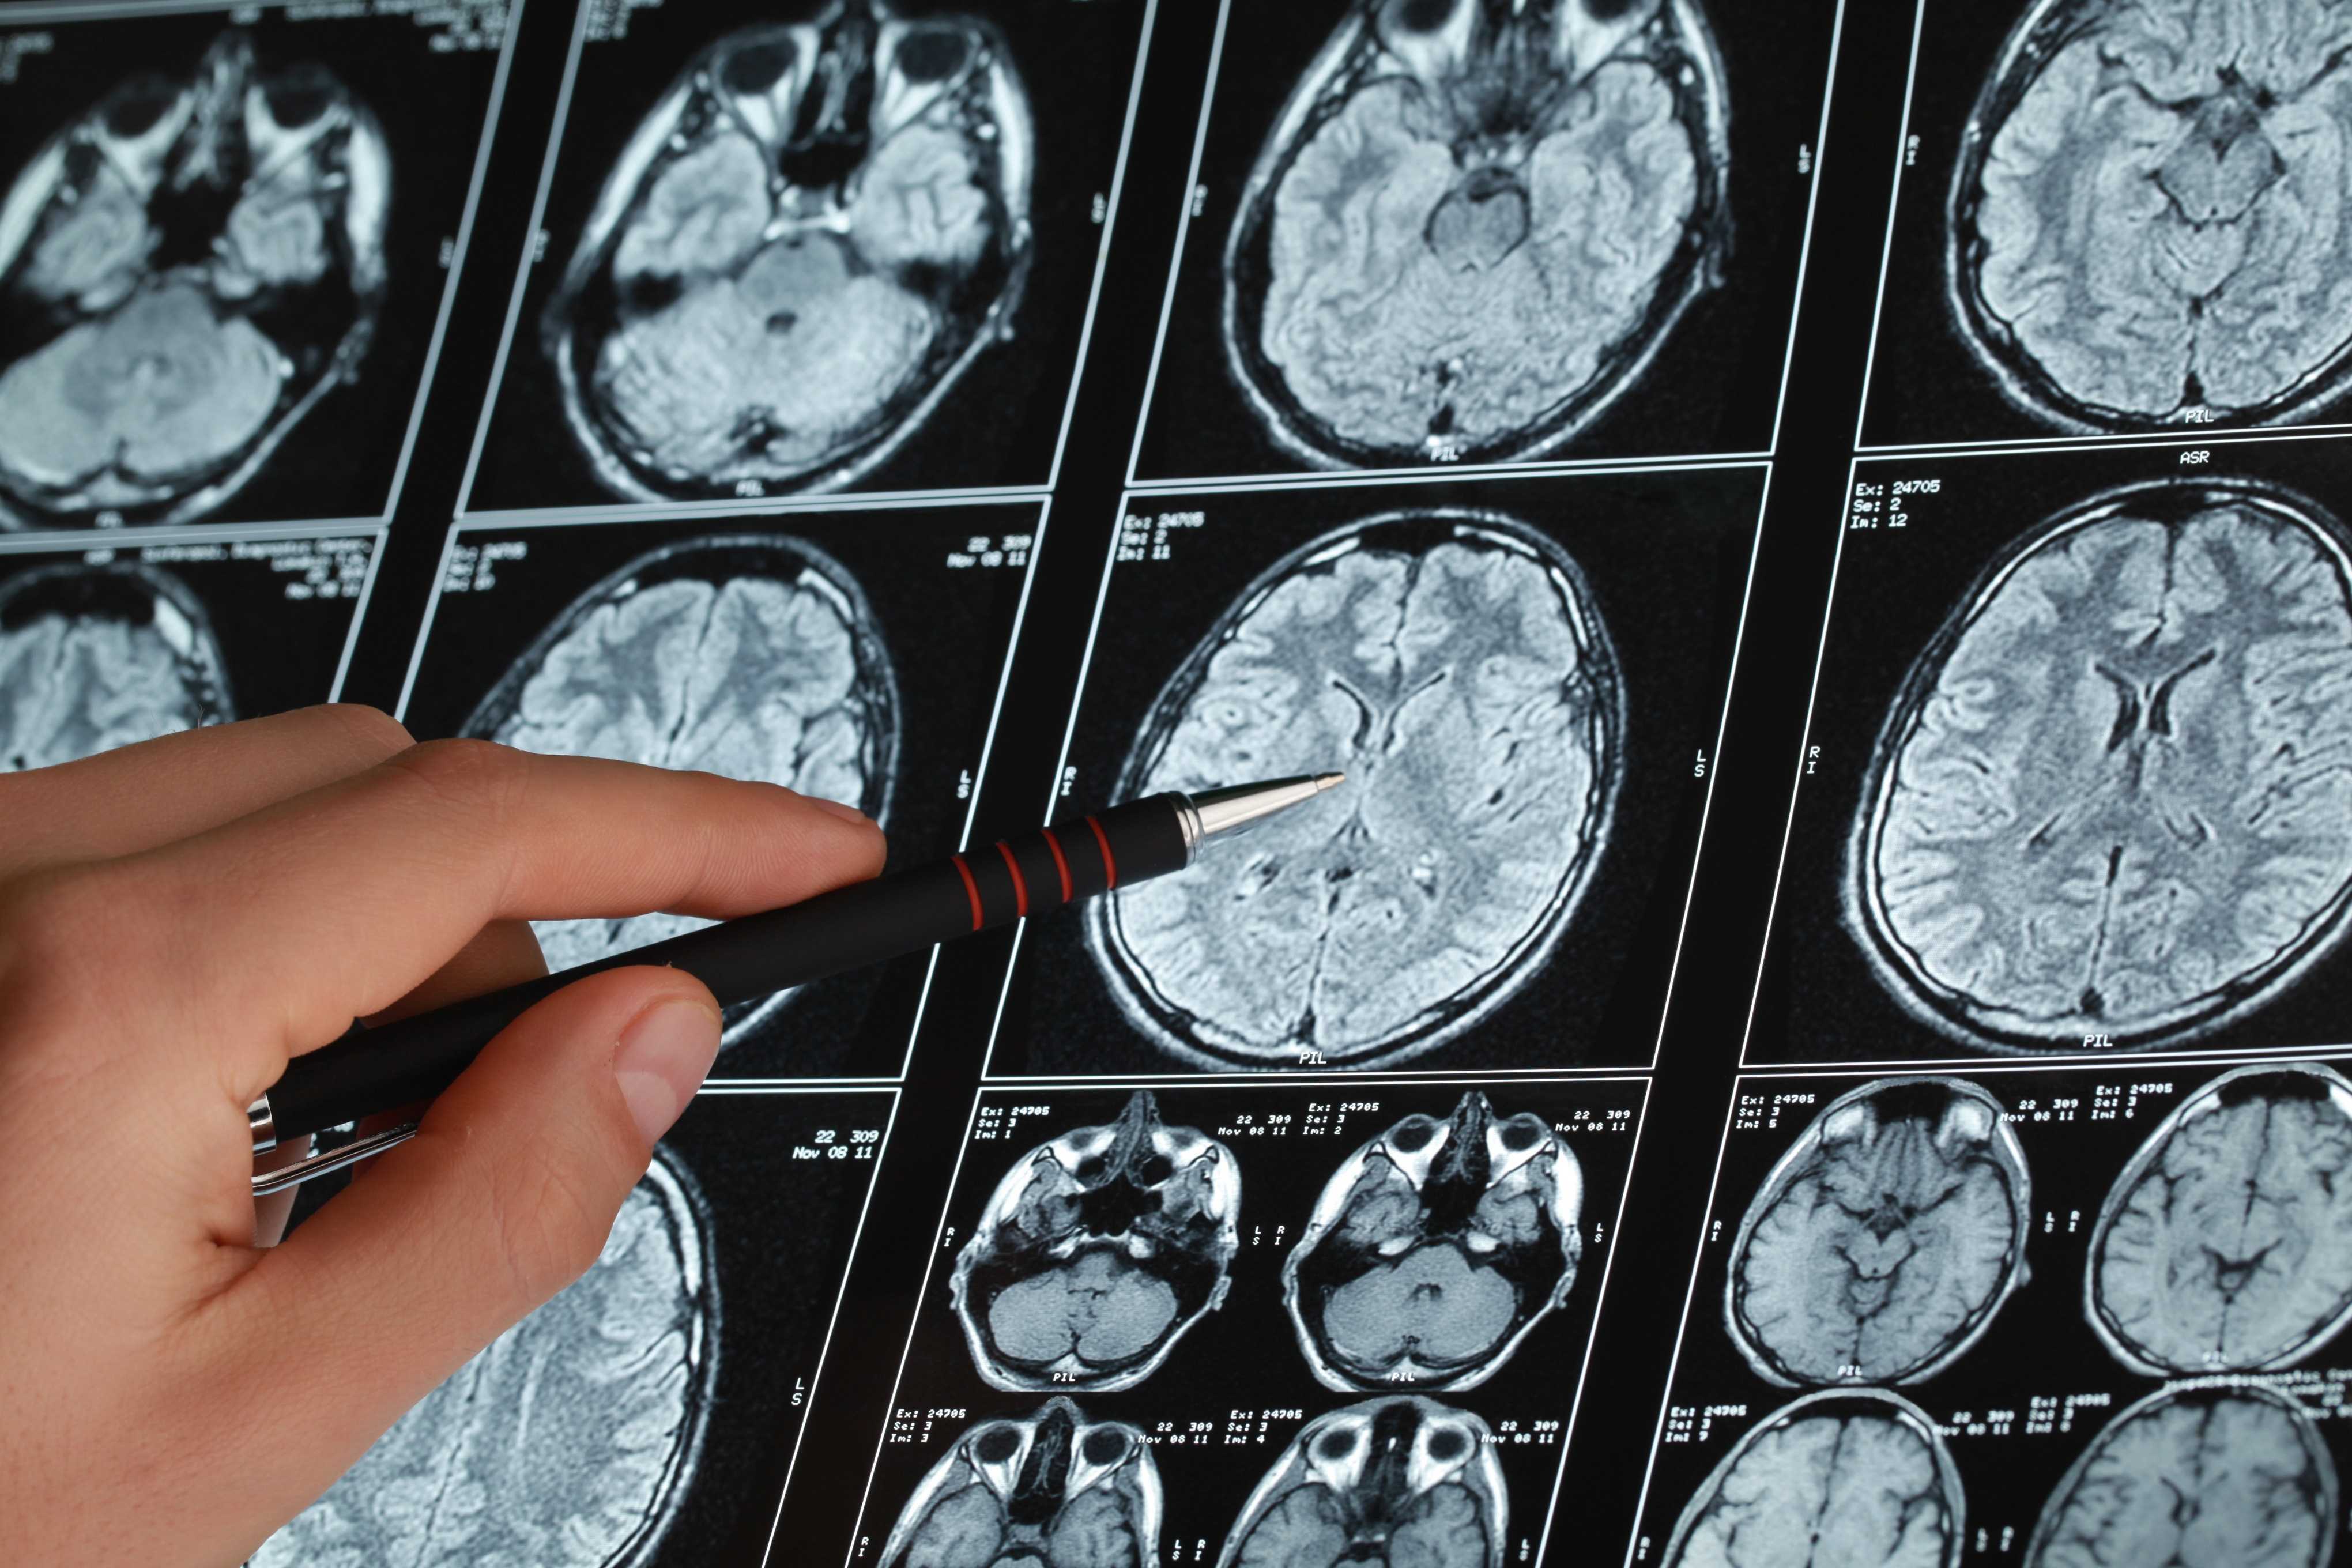 Мрт головного мозга опухоль. Снимки мрт головного мозга с опухолью. Опухоль головного мозга на кт. Опухоли головного мозга MRT. Опухоль головного мозга отек